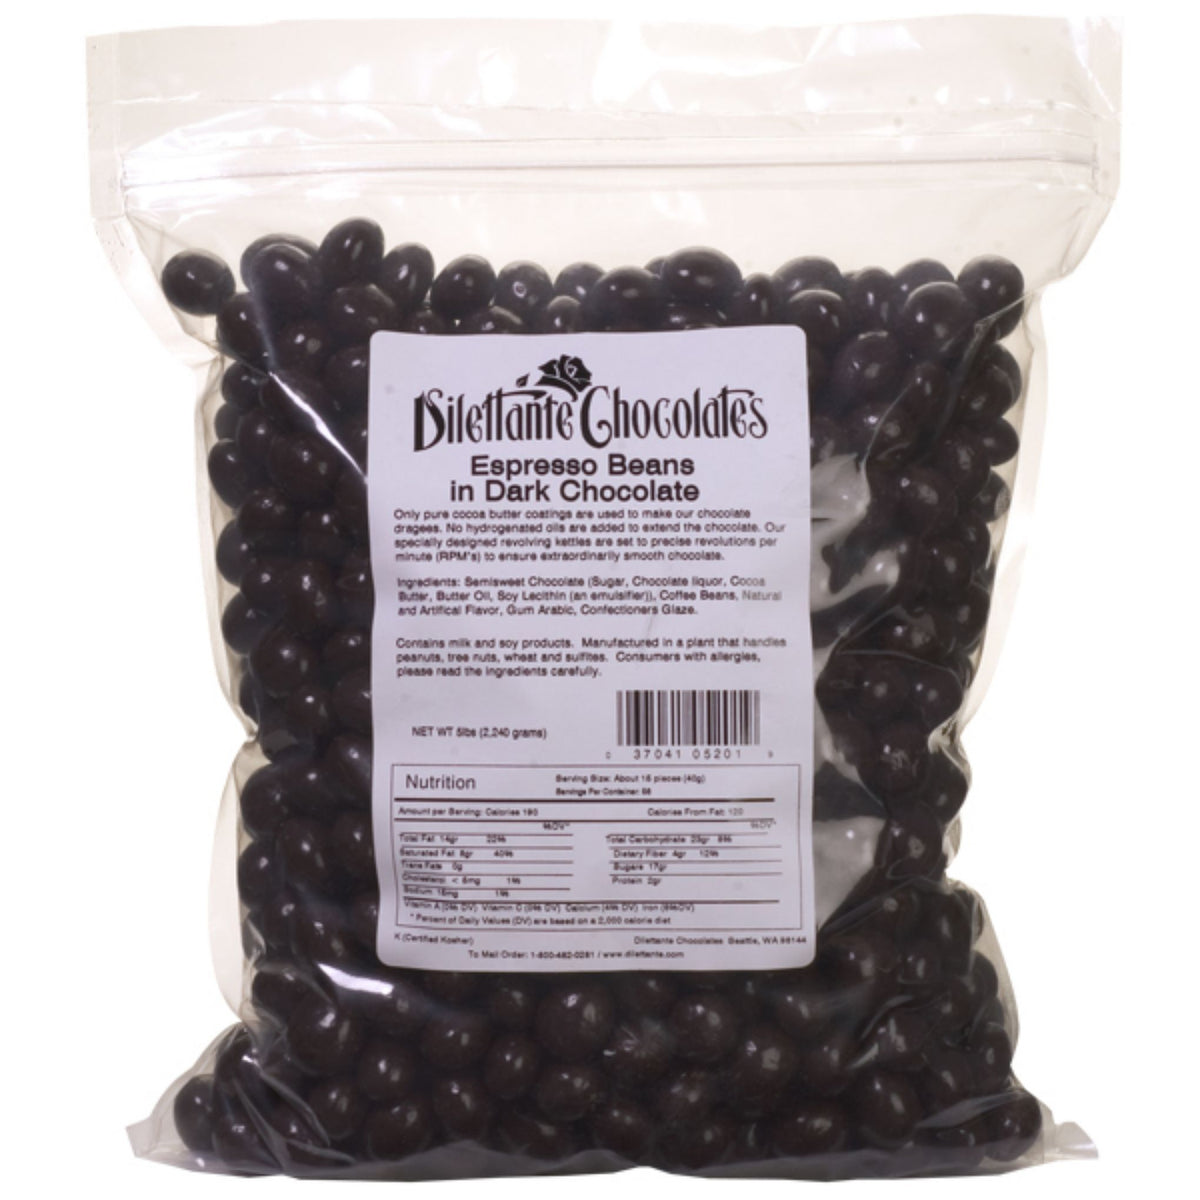 Dilettante Chocolates Espresso Beans in Dark Chocolate Placed Inside a 5-Pound Bulk Bag